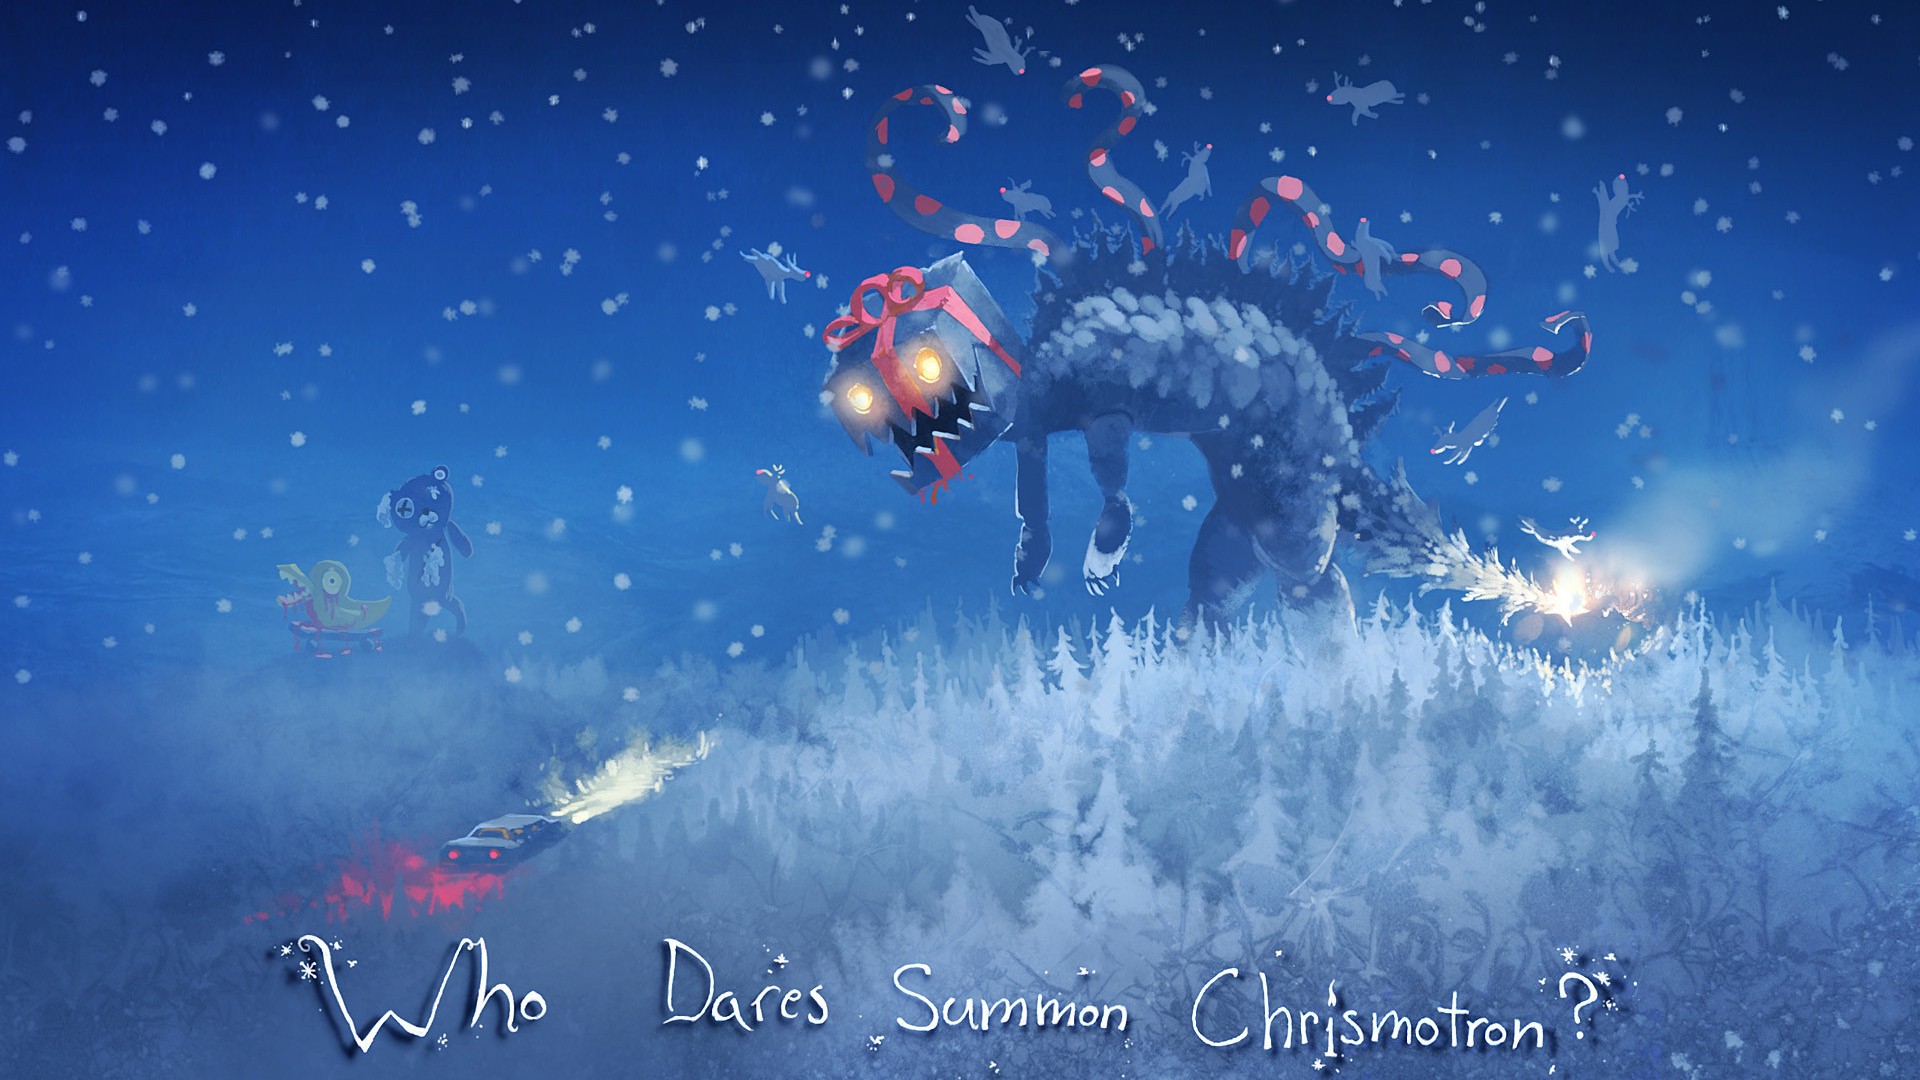 Christmas, Reindeer, Creature, Snow, Teddy Bears, Trees, Rubber Ducks Wallpaper